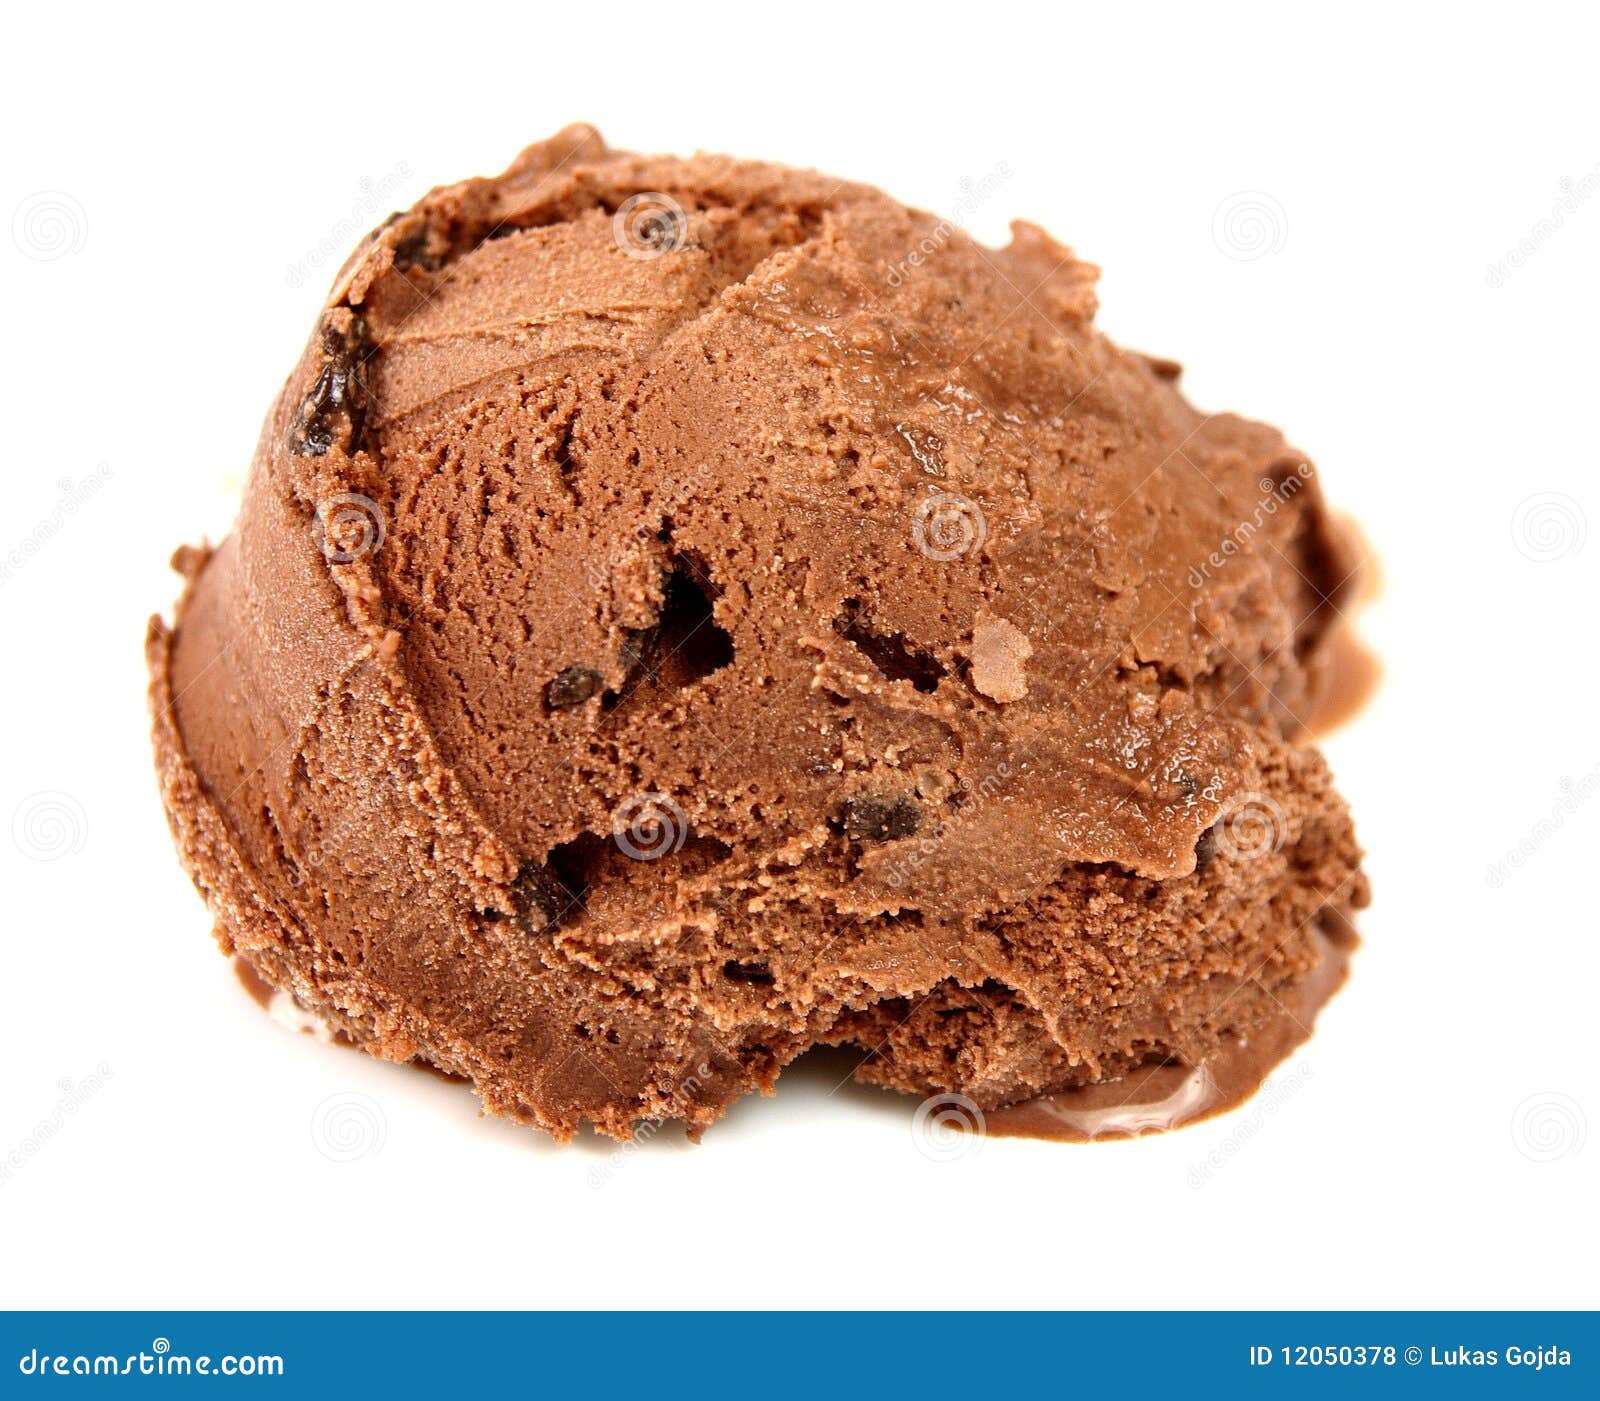 https://thumbs.dreamstime.com/z/chocolate-ice-cream-scoop-12050378.jpg